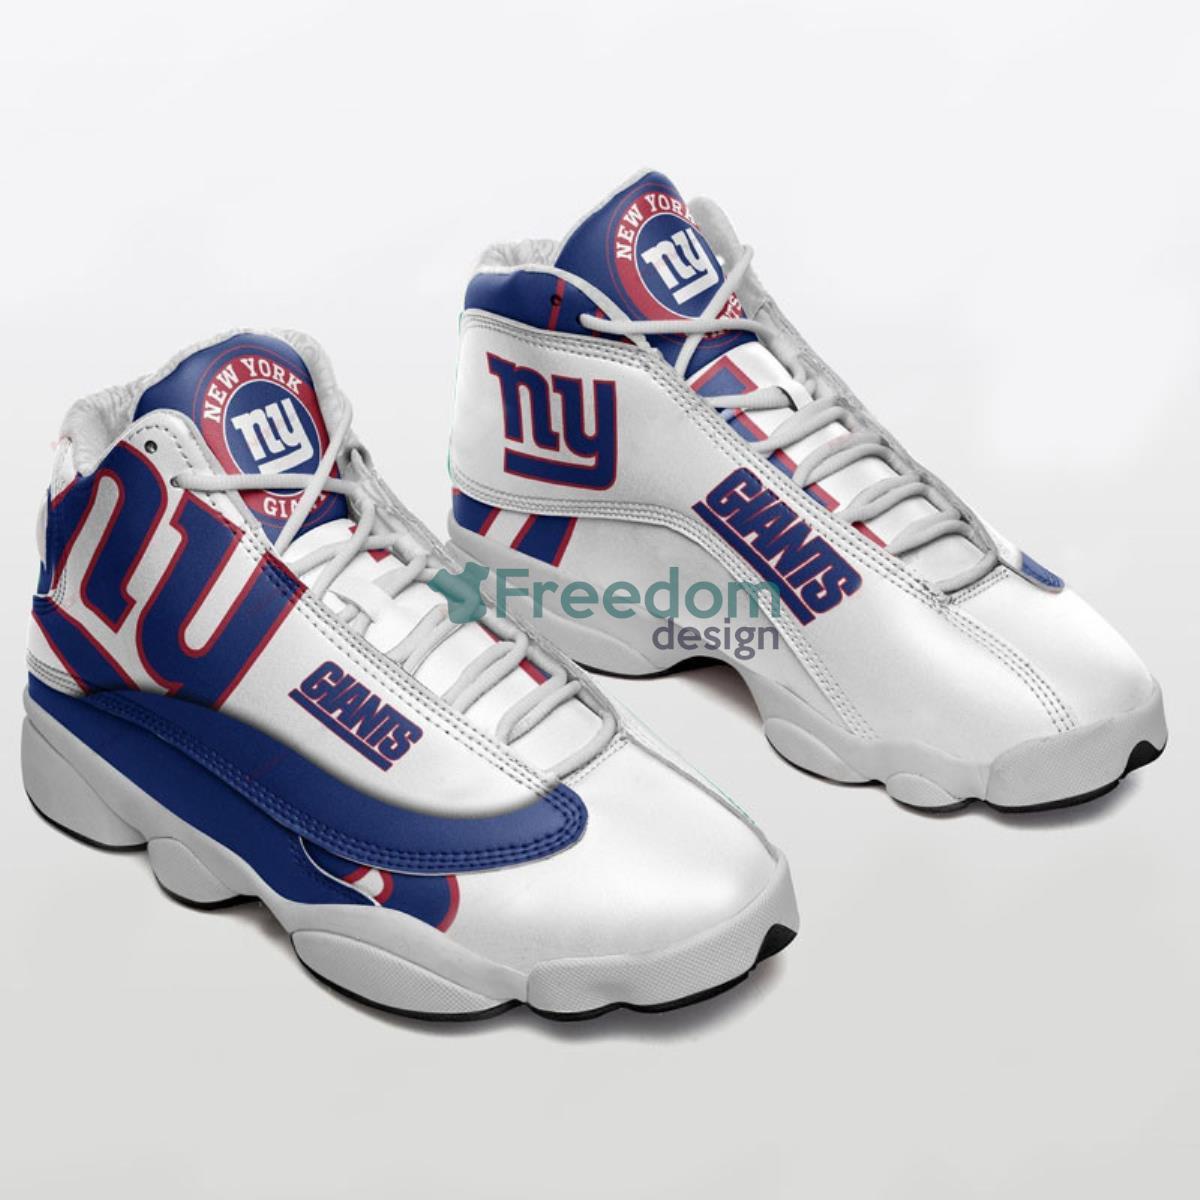 New York Giants Football Team Air Jordan 13 Shoes - Freedomdesign